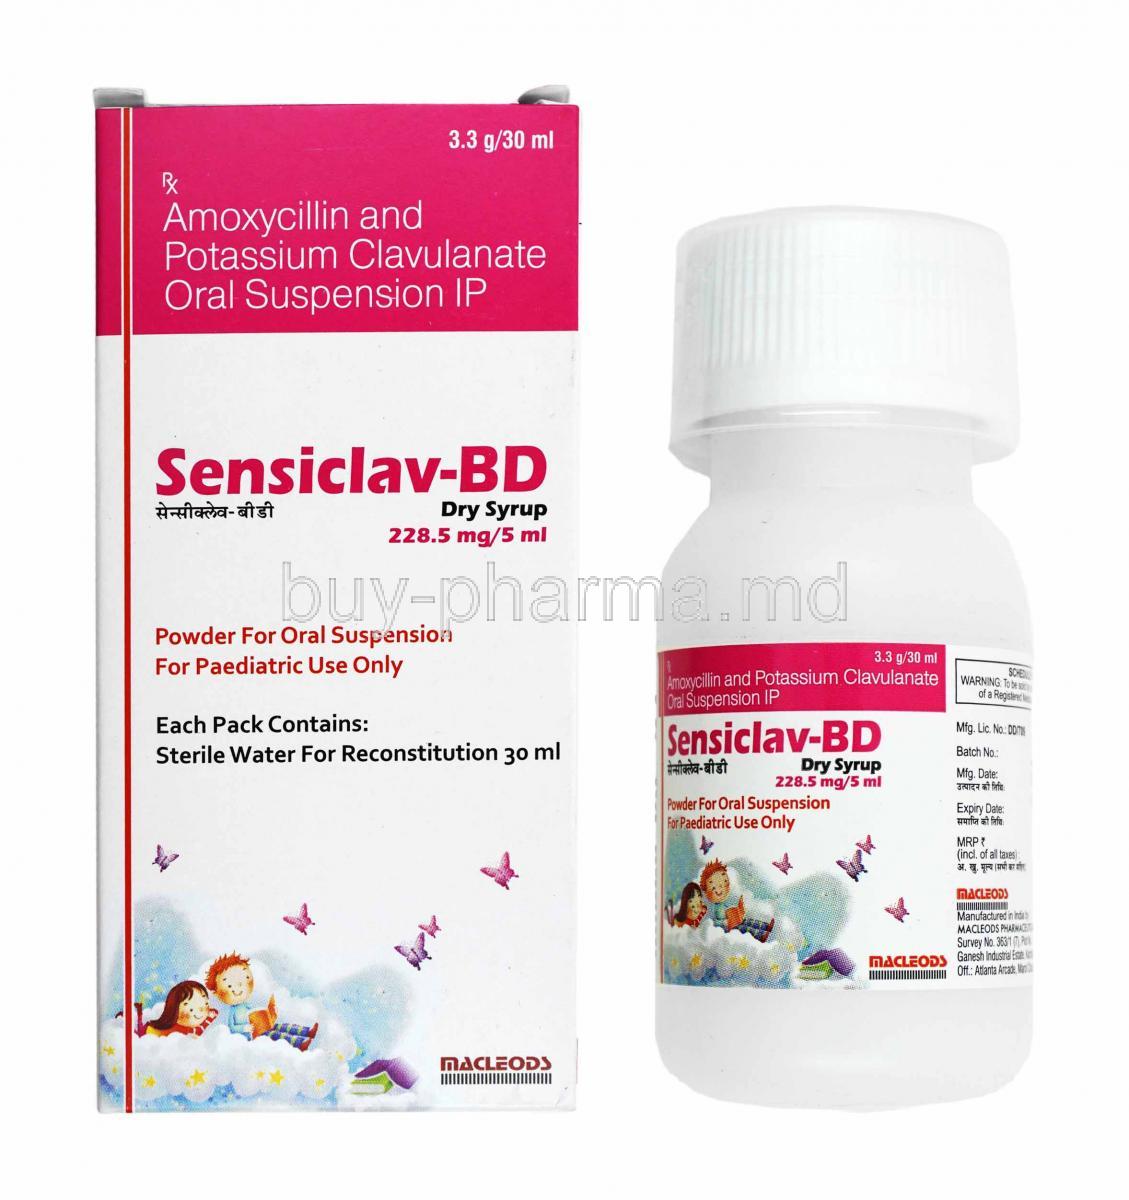 Sensiclav-BD Dry Syrup, Amoxicillin and Clavulanic Acid box and bottle